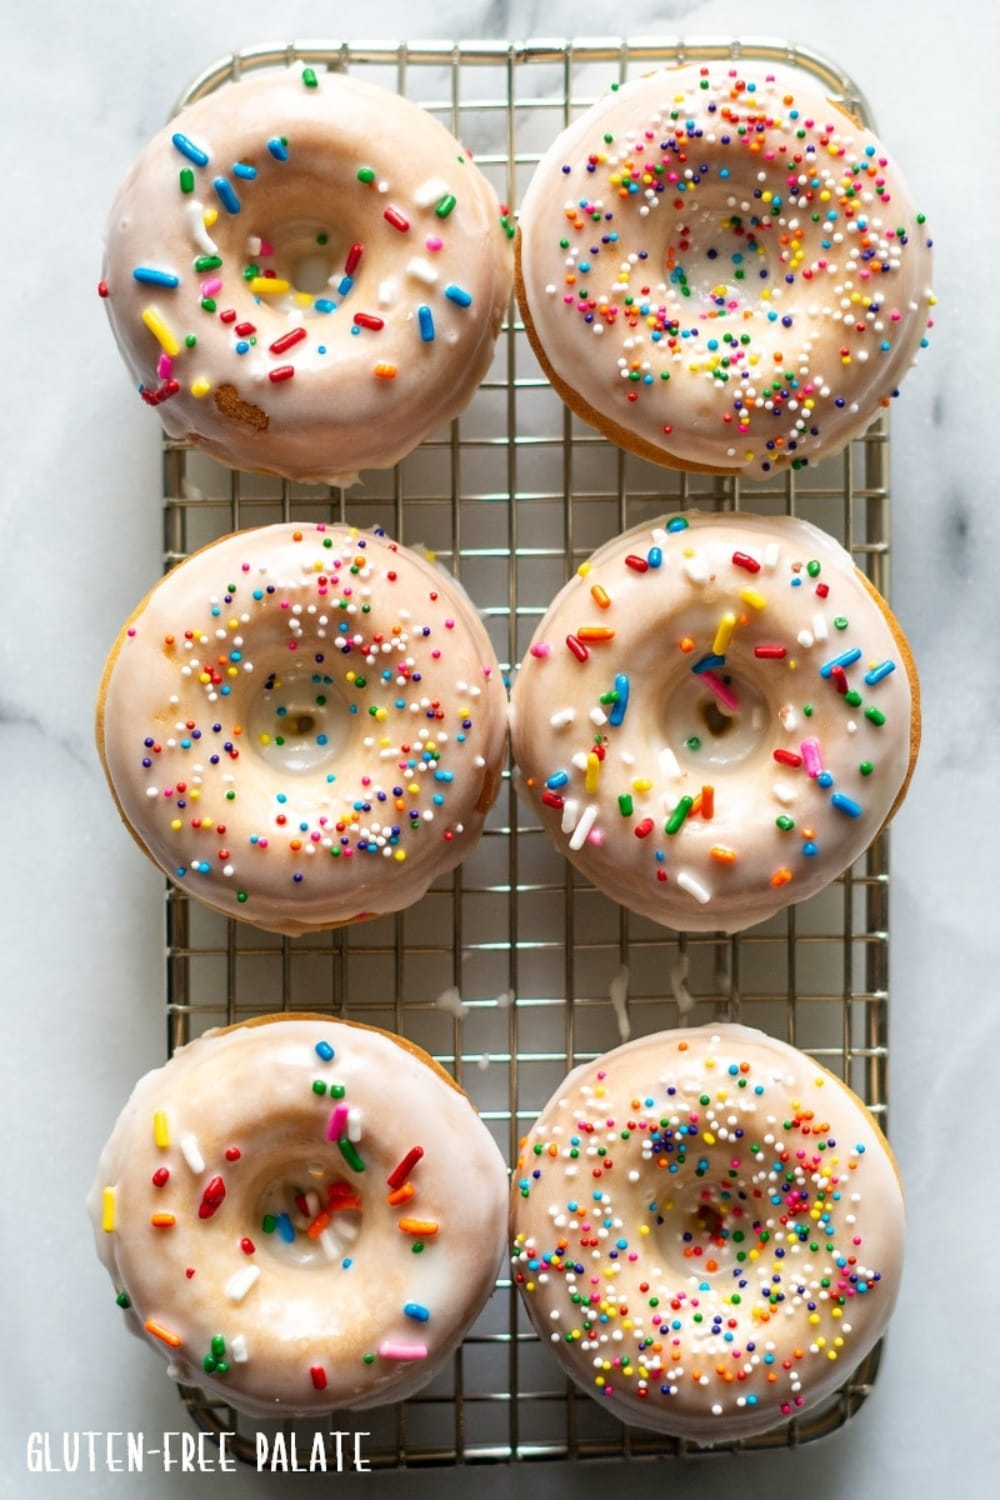 Gluten-Free Vanilla Cake Donuts